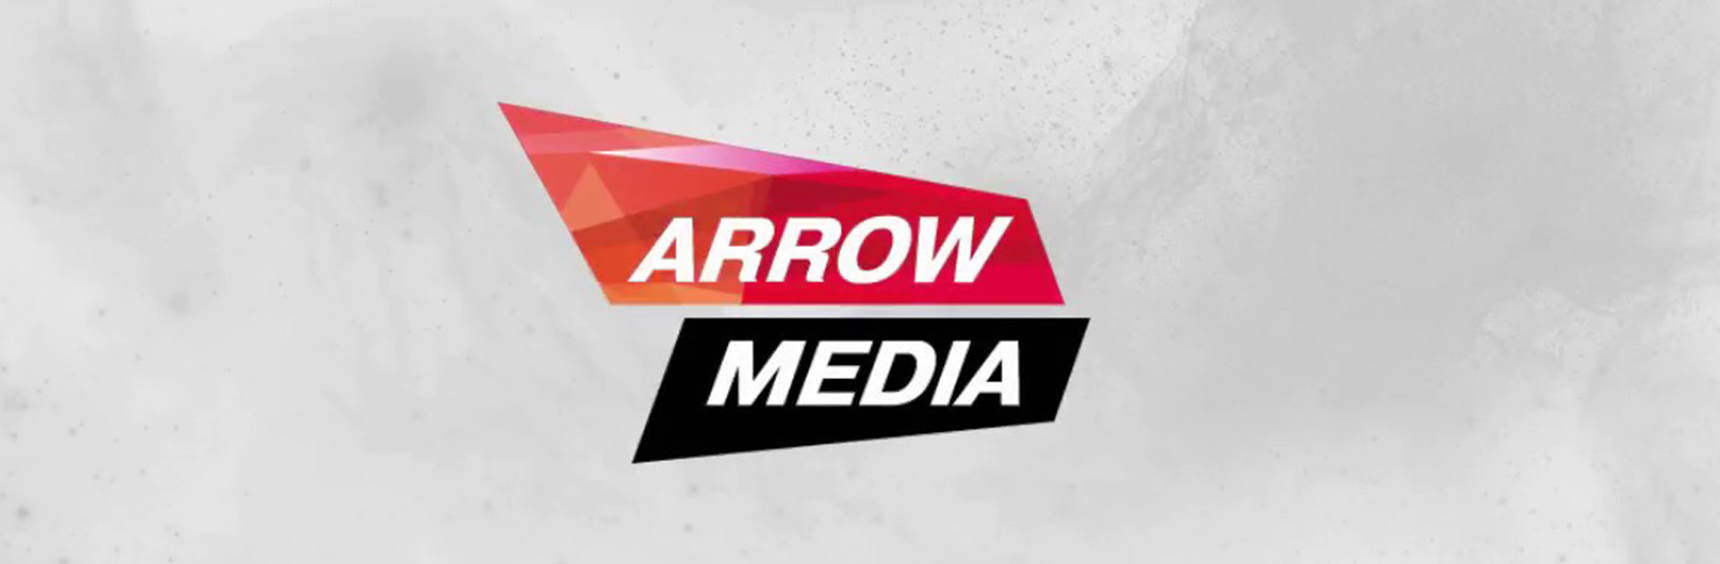 Создали цифровую экосистему рекламного агентства ArrowMedia